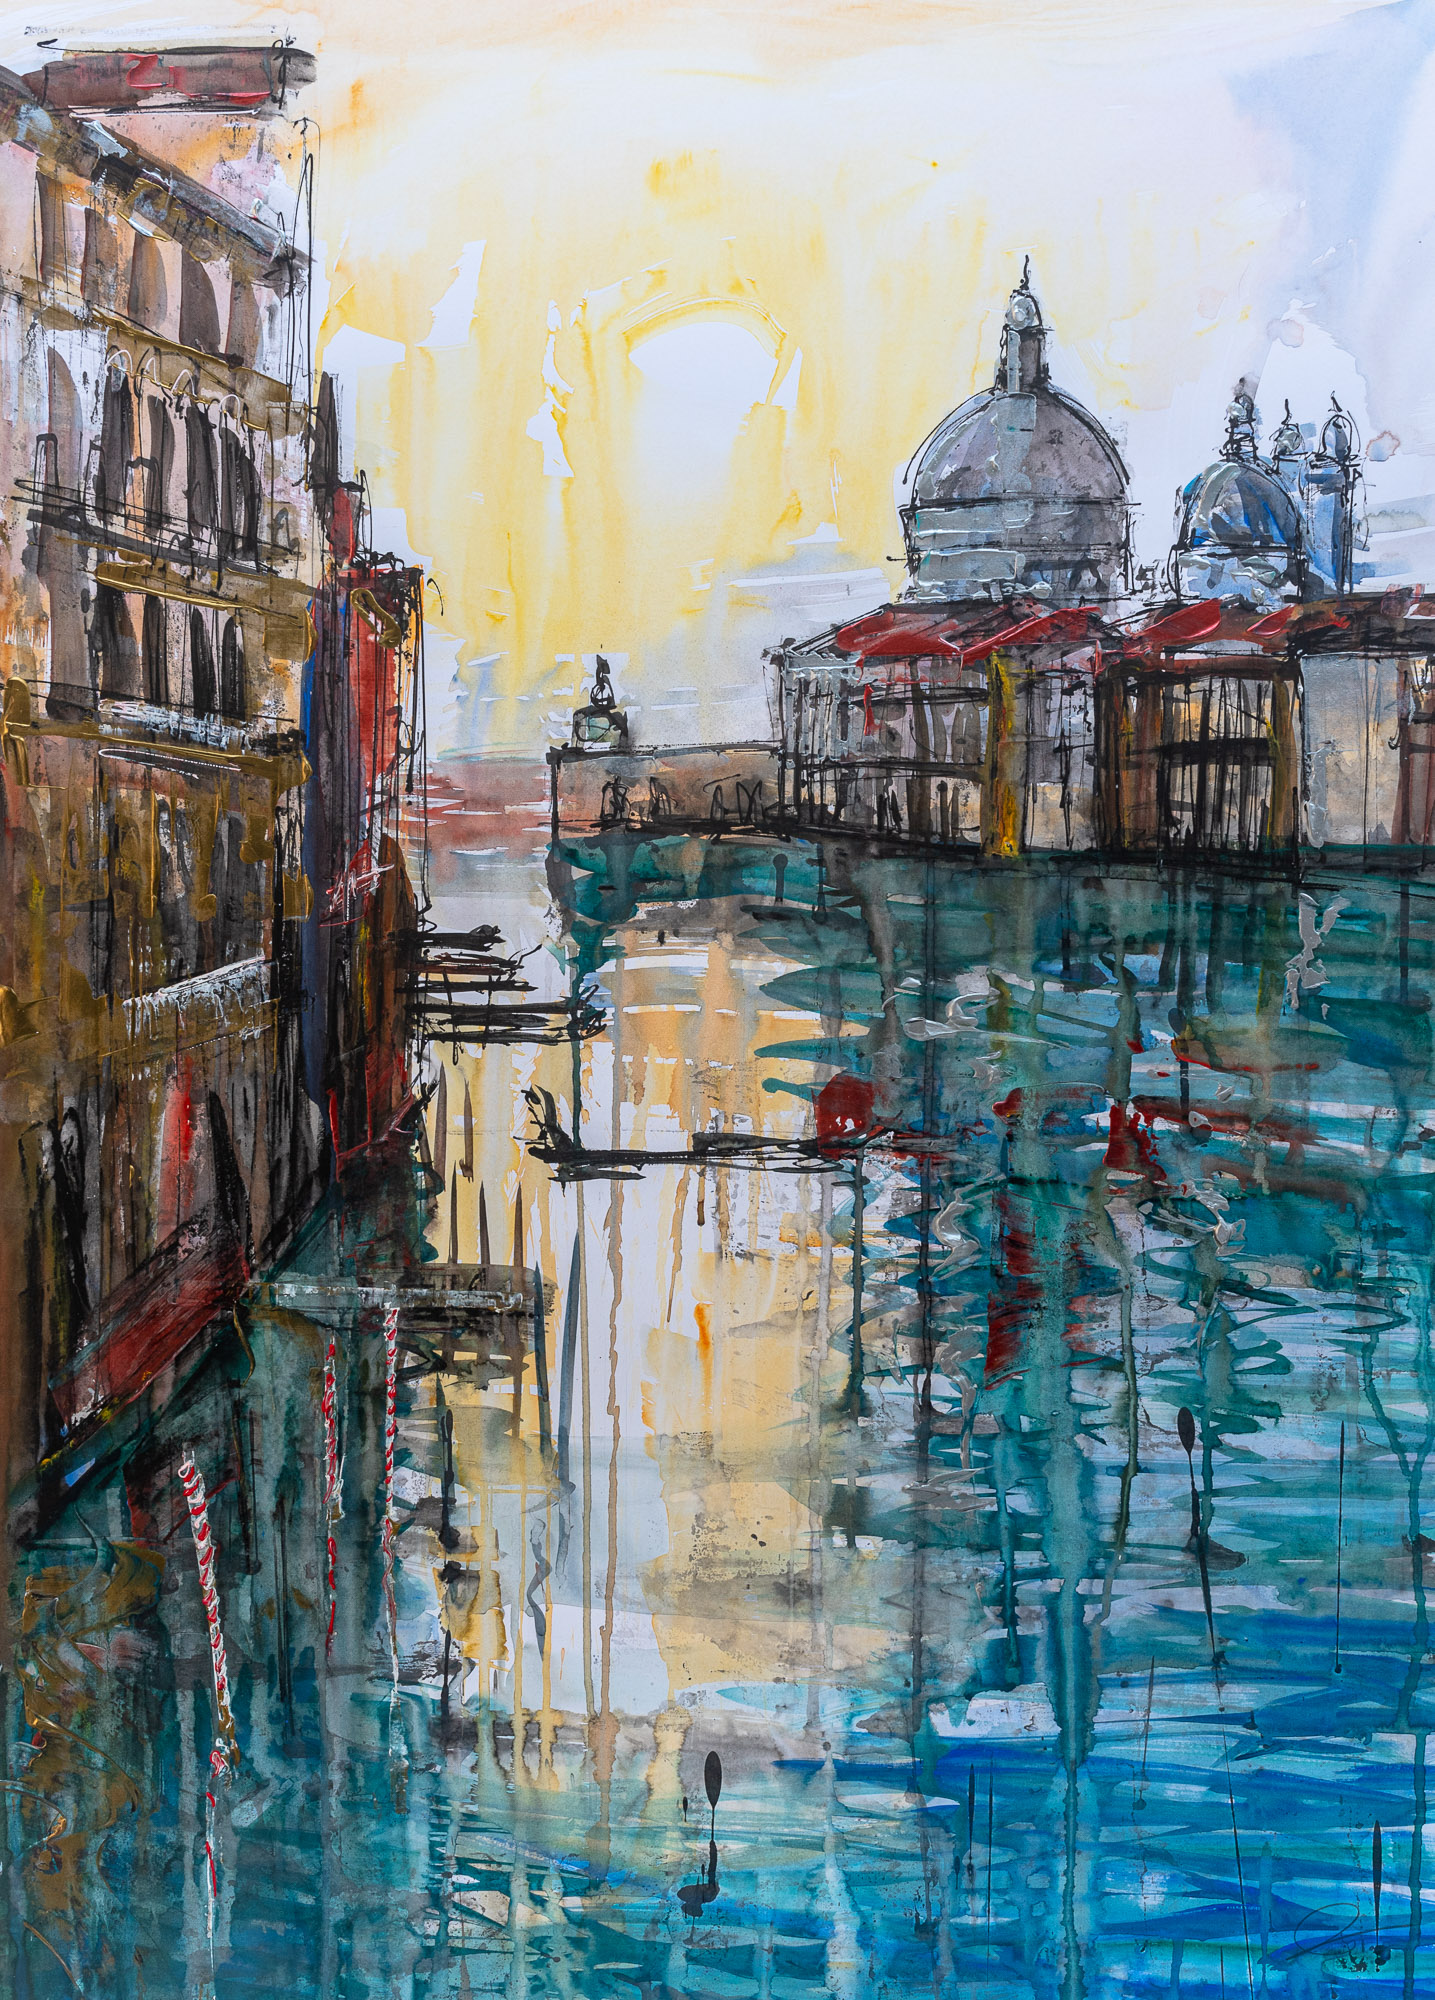 Gondola Travel - Original Venice Gondola Painting by UK Contemporary Cityscape Artist Paul Kenton, from the Watercolour Collection